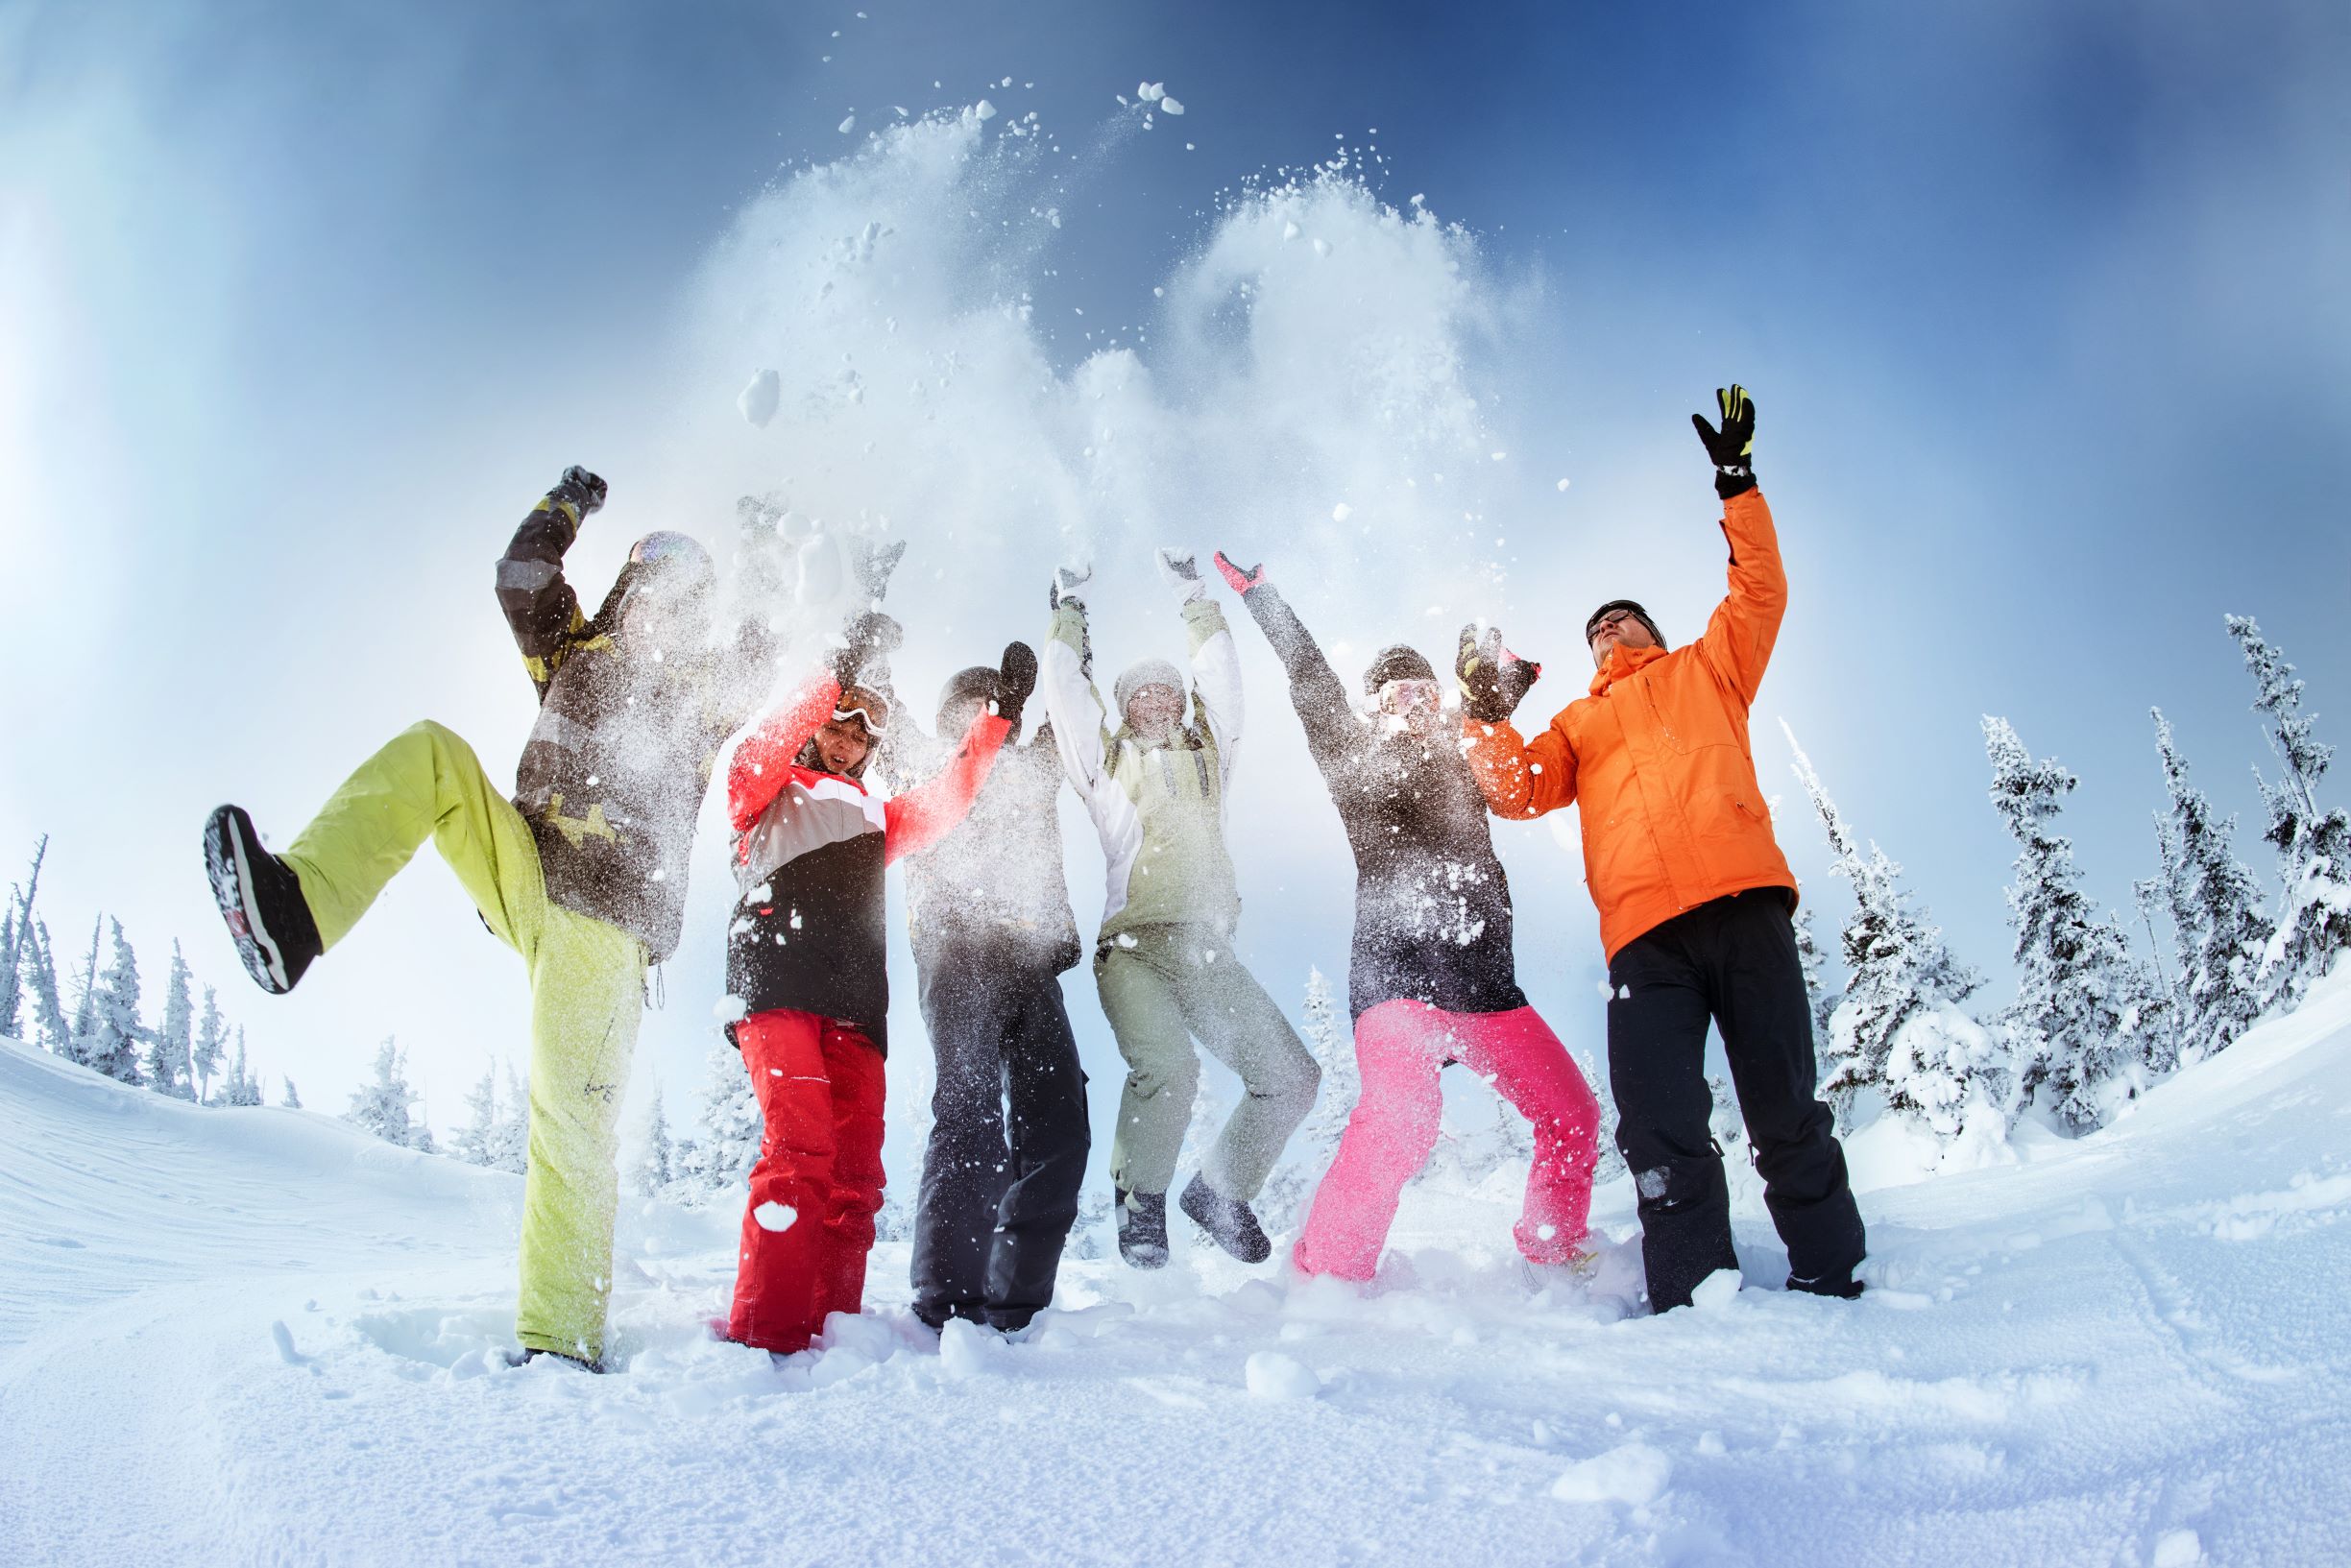 School Group Travel far more than just a ski trip Snowscene